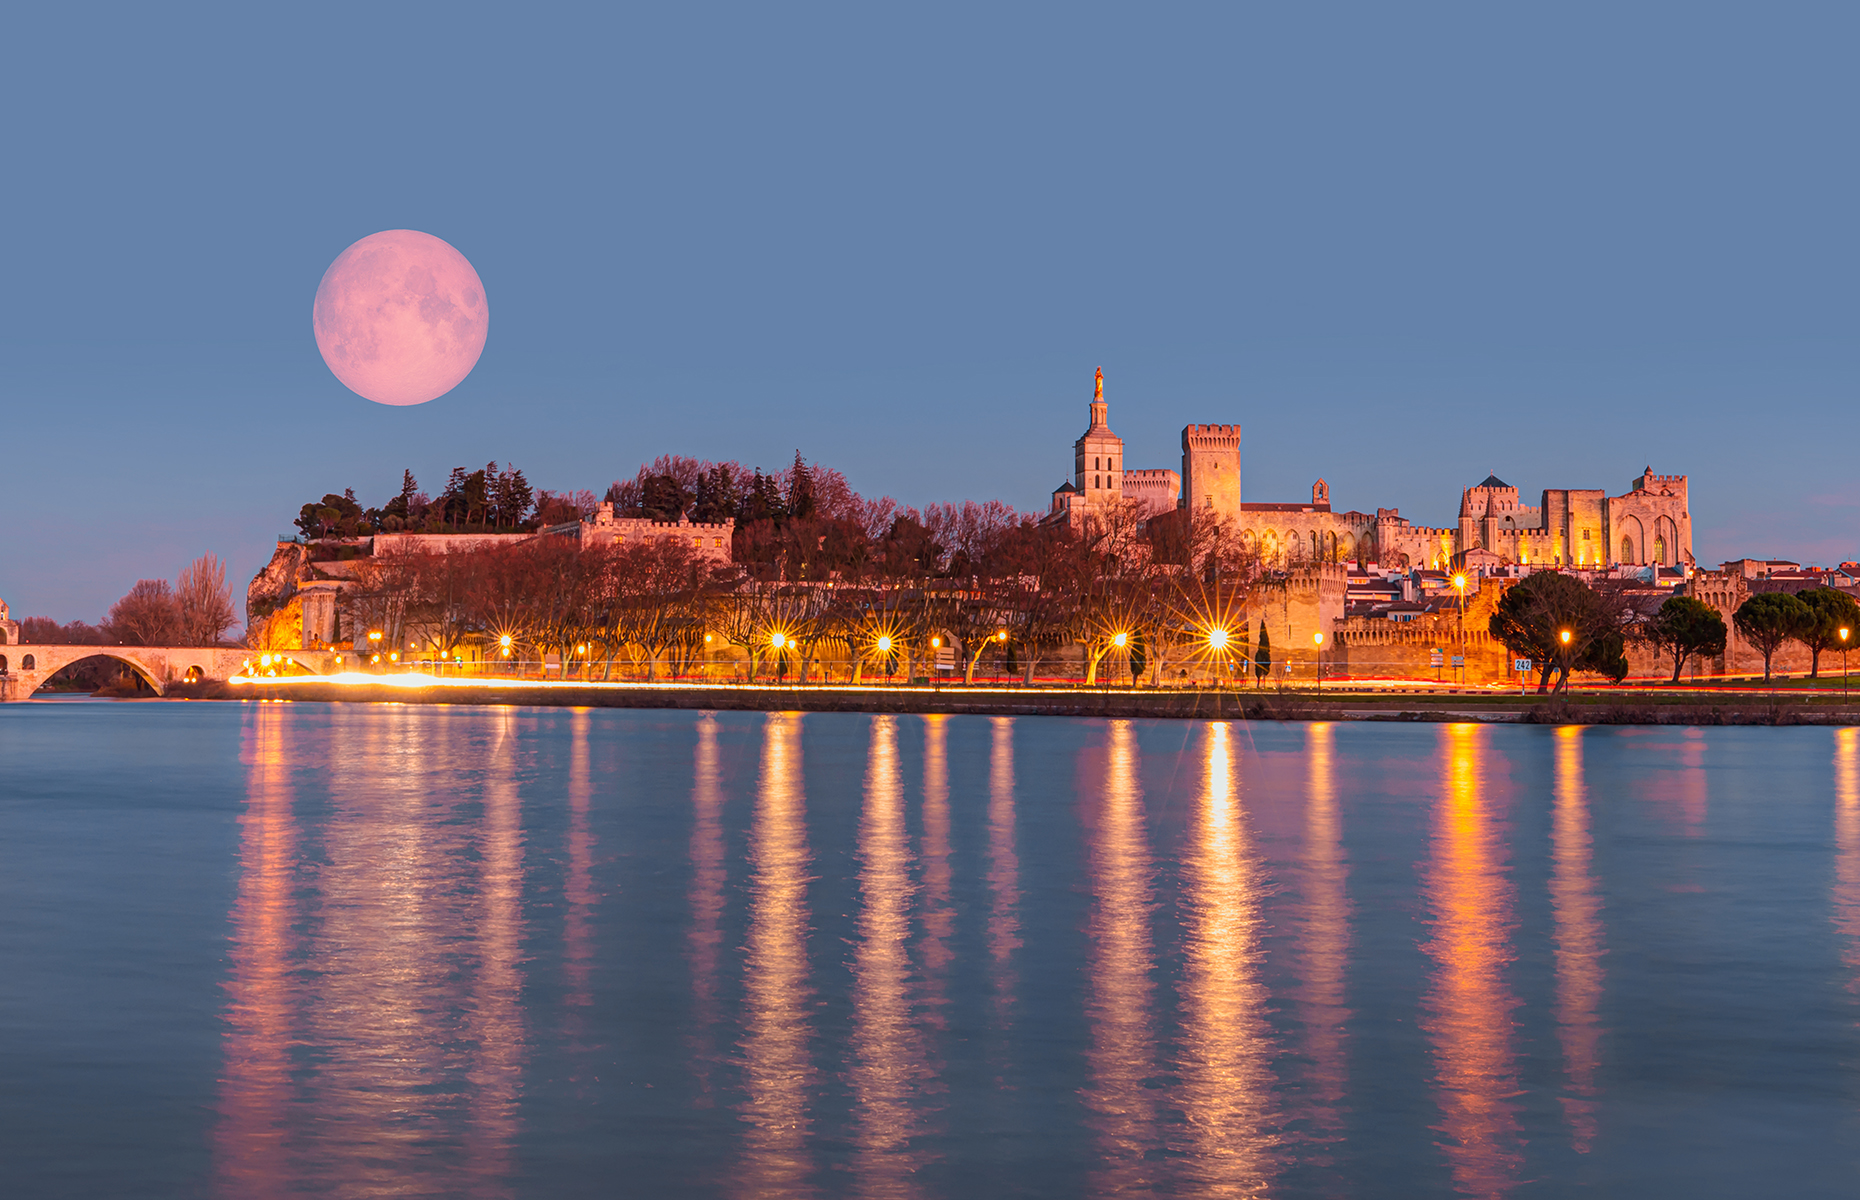 Avignon by night. (Image: muratart/Shutterstock)